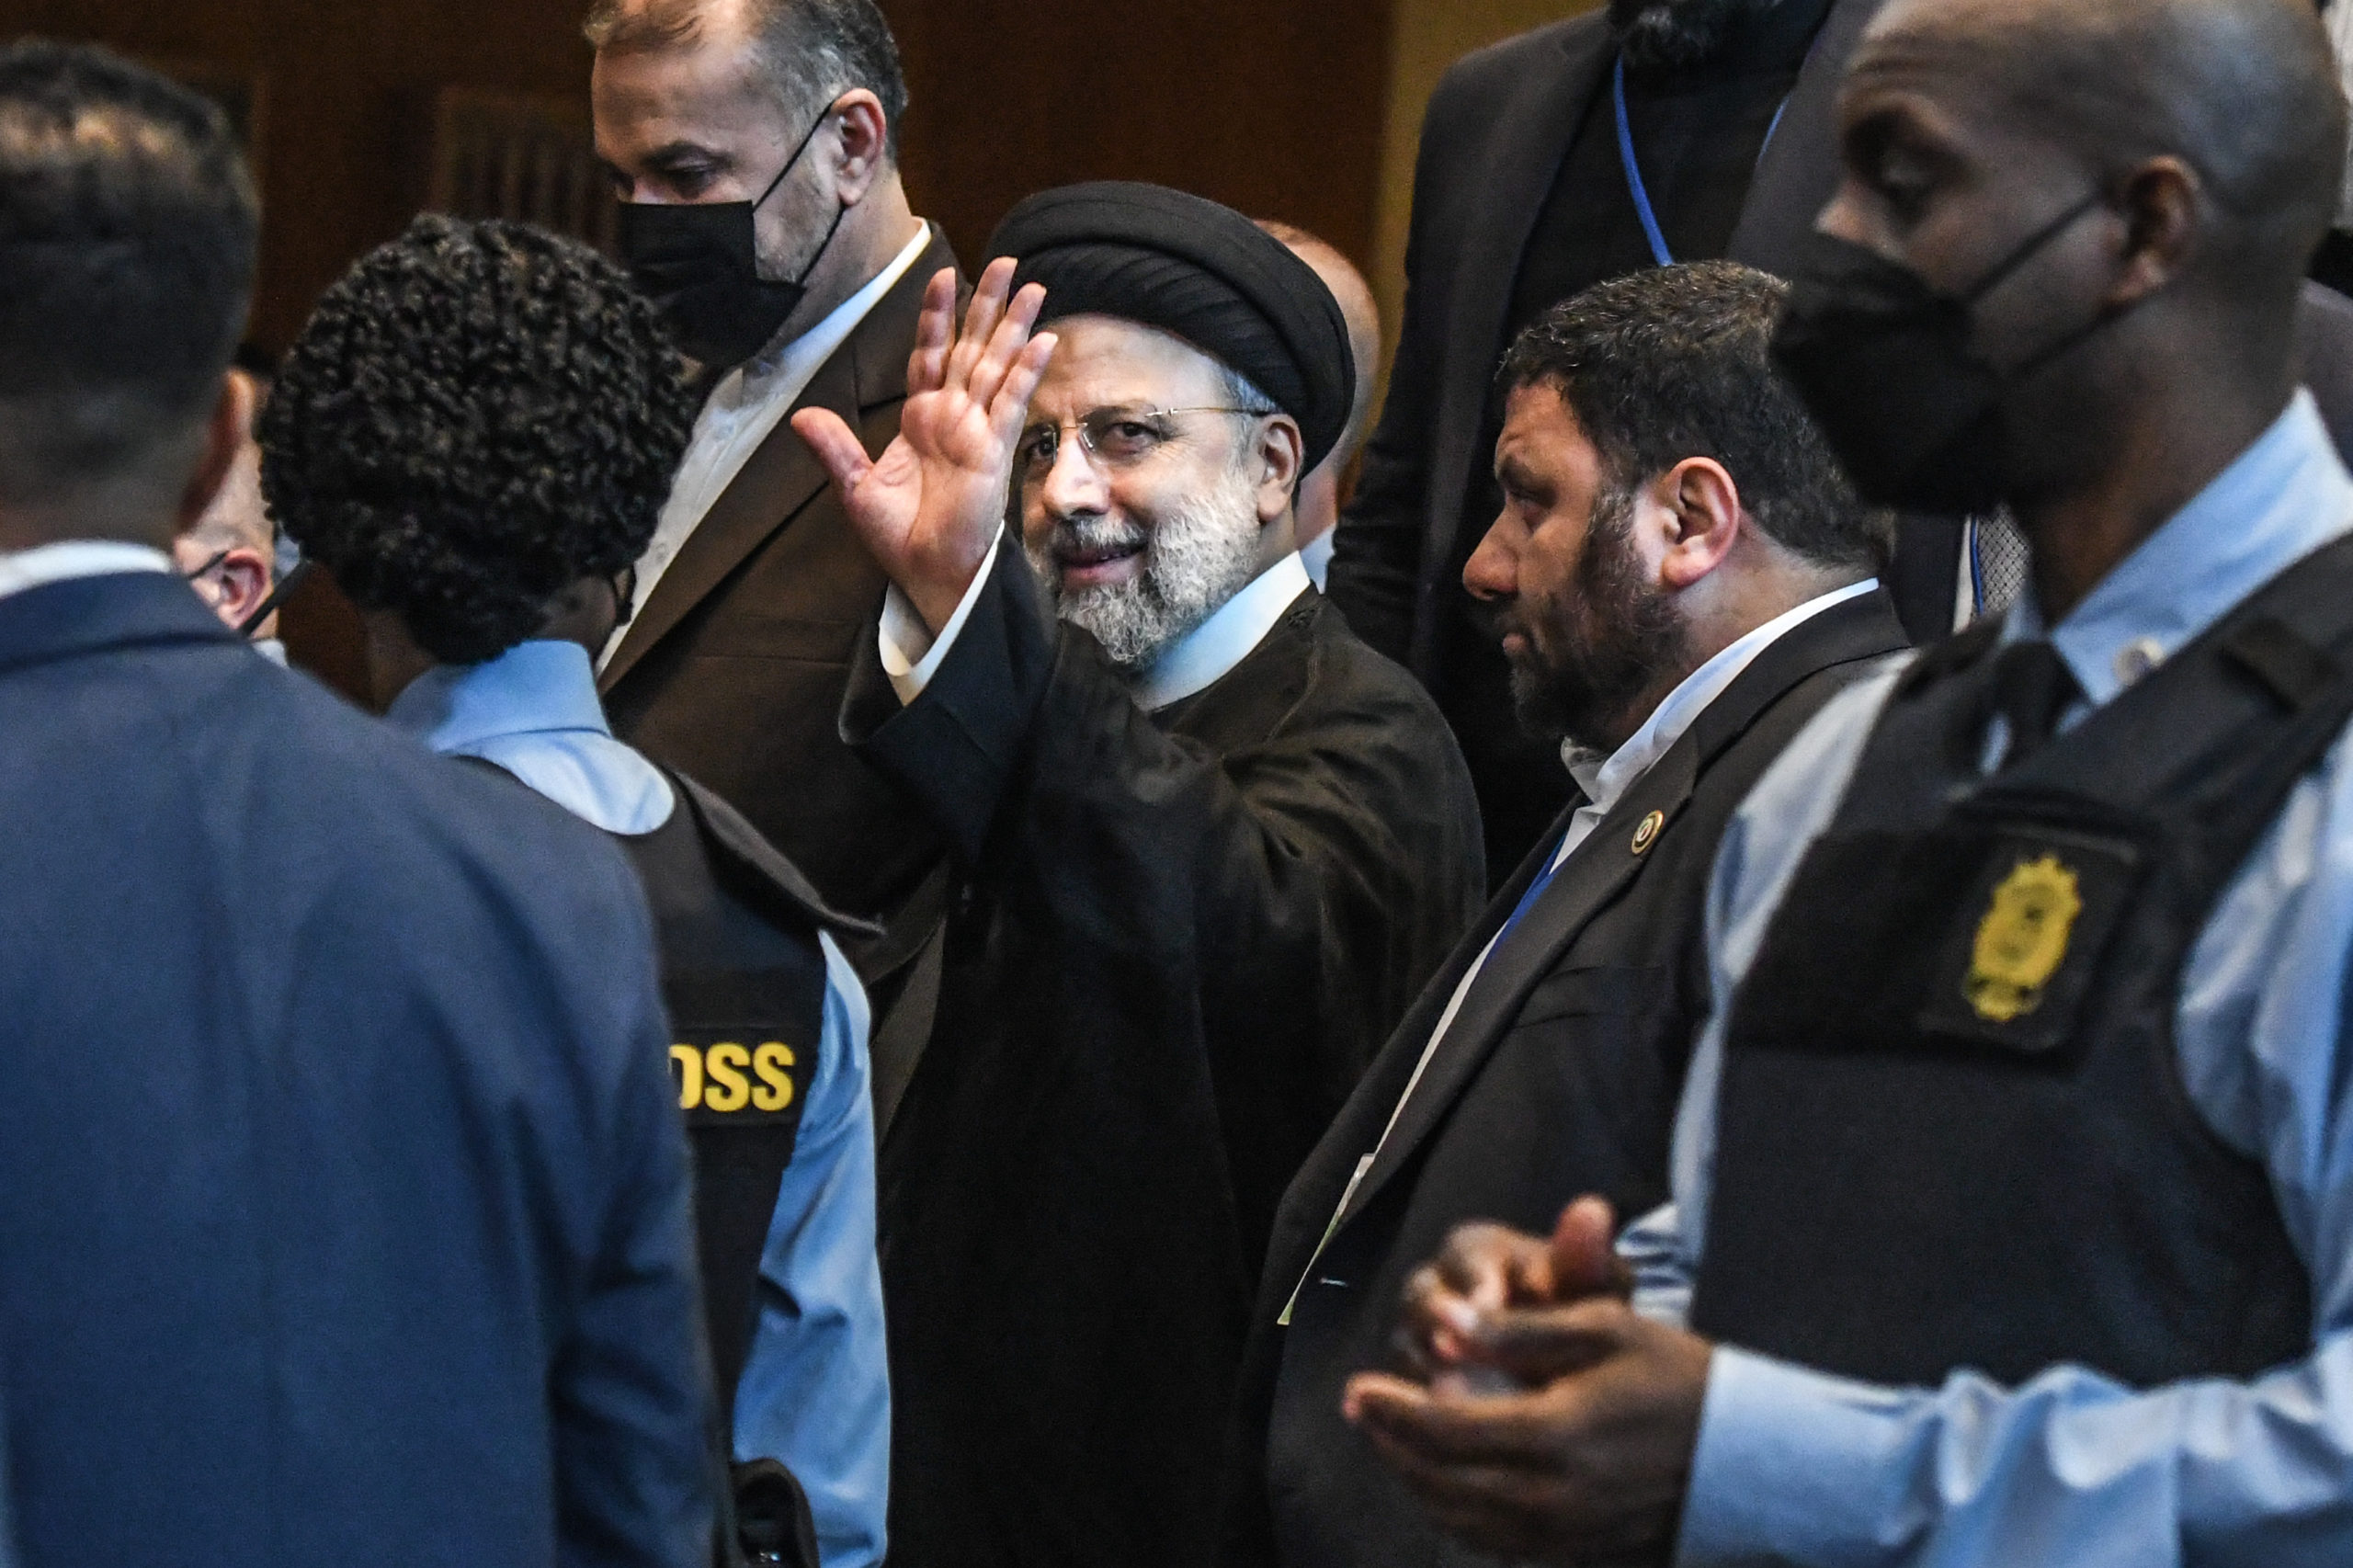 NEW YORK, NY - SEPTEMBER 21: Iran President Ebrahim Raisi walks through the 77th United Nations General Assembly on September 21, 2022 in New York City. 